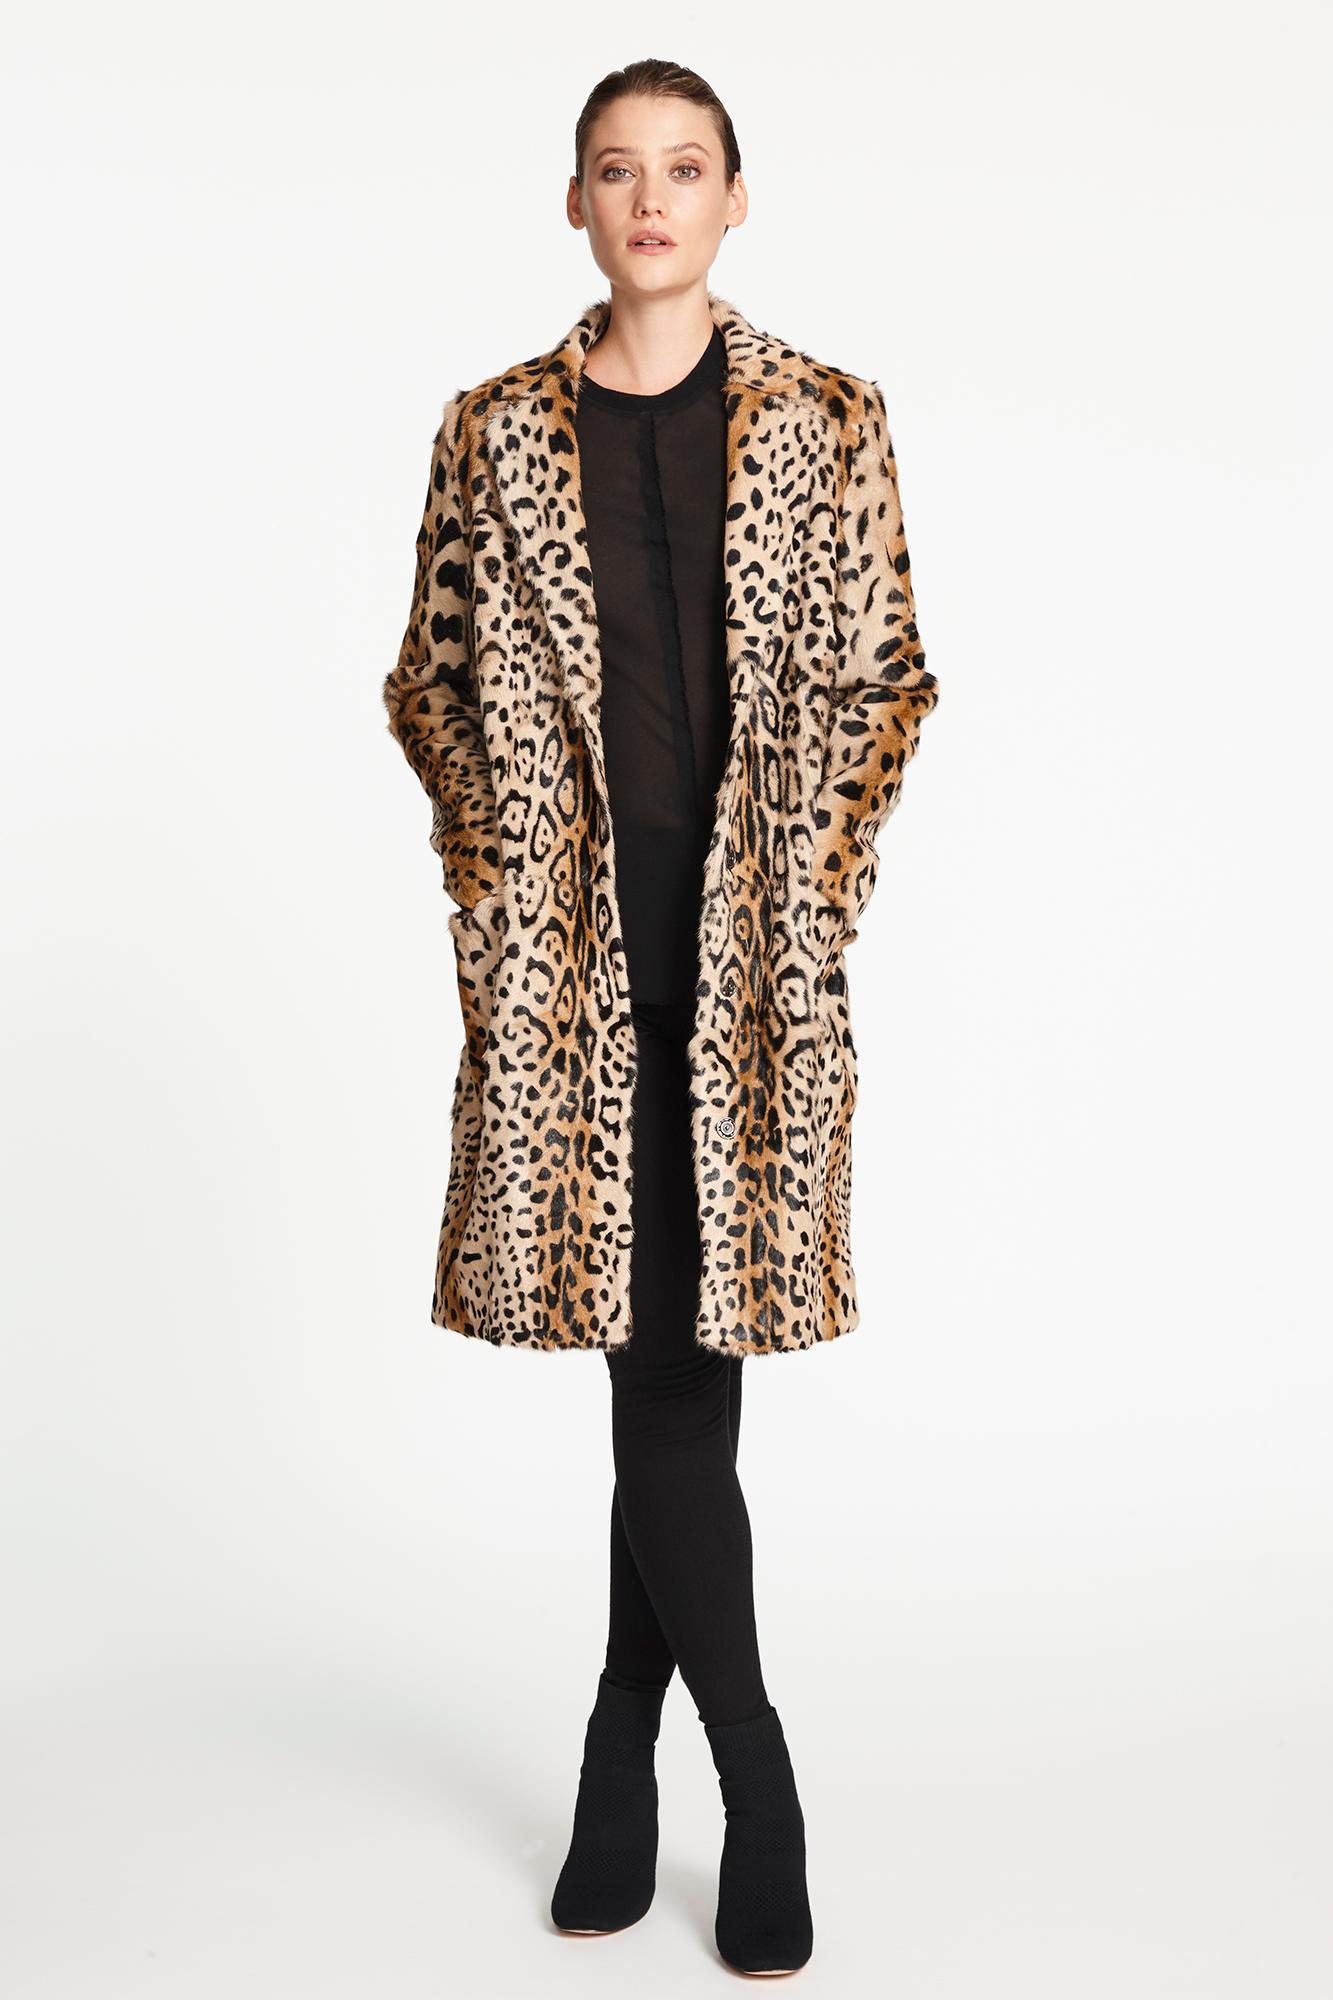 Women's Verheyen London Leopard Print Coat in Natural Goat Hair Fur Size uk 8